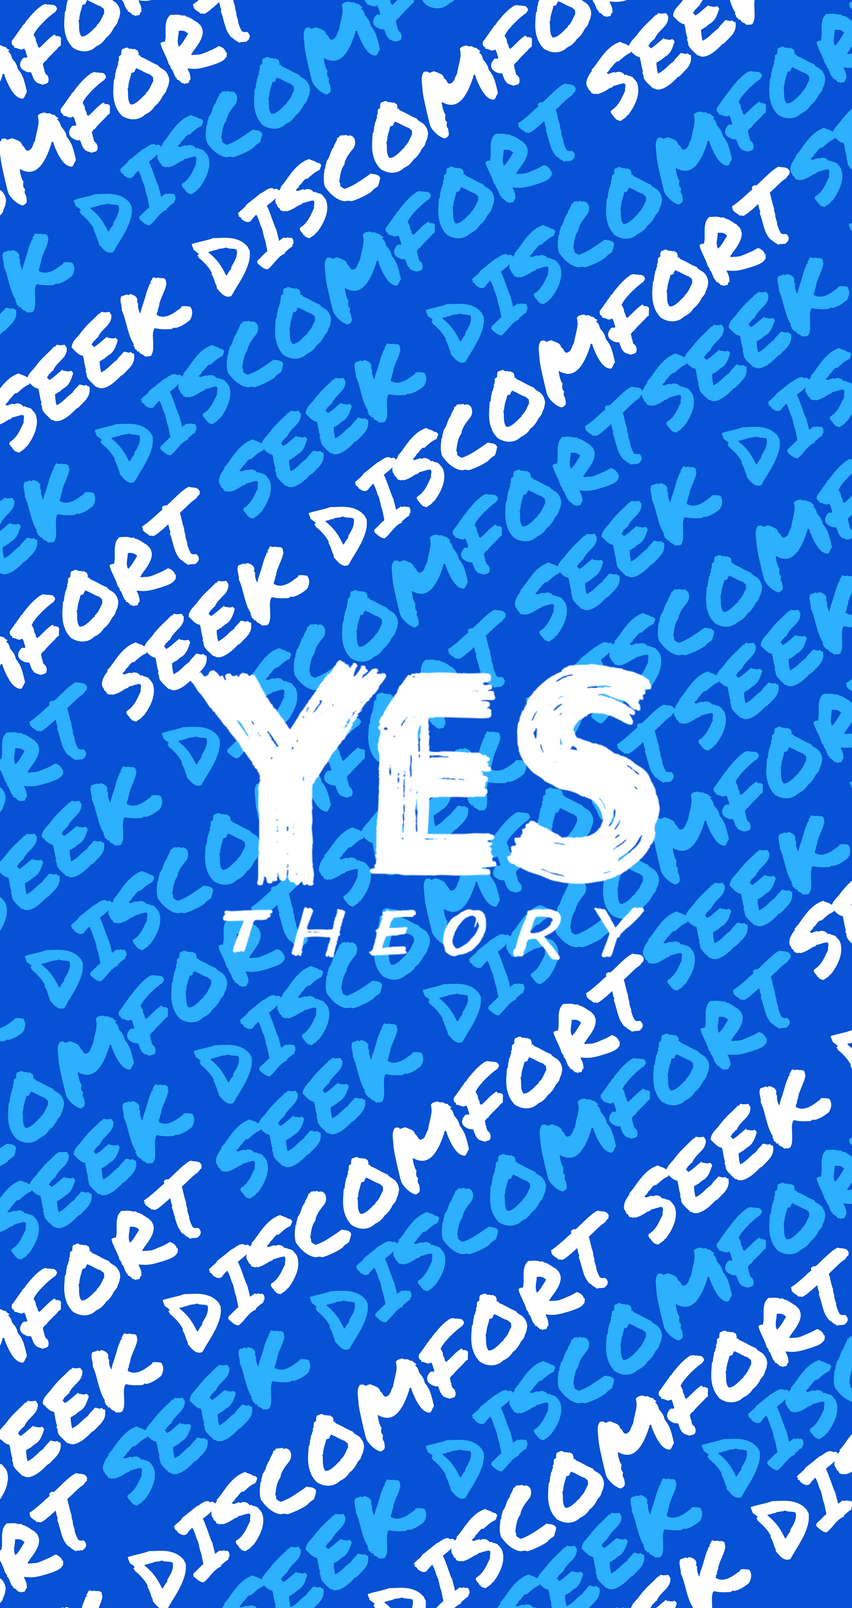 Yes Theory “Seek Discomfort” Phone Wallpaper